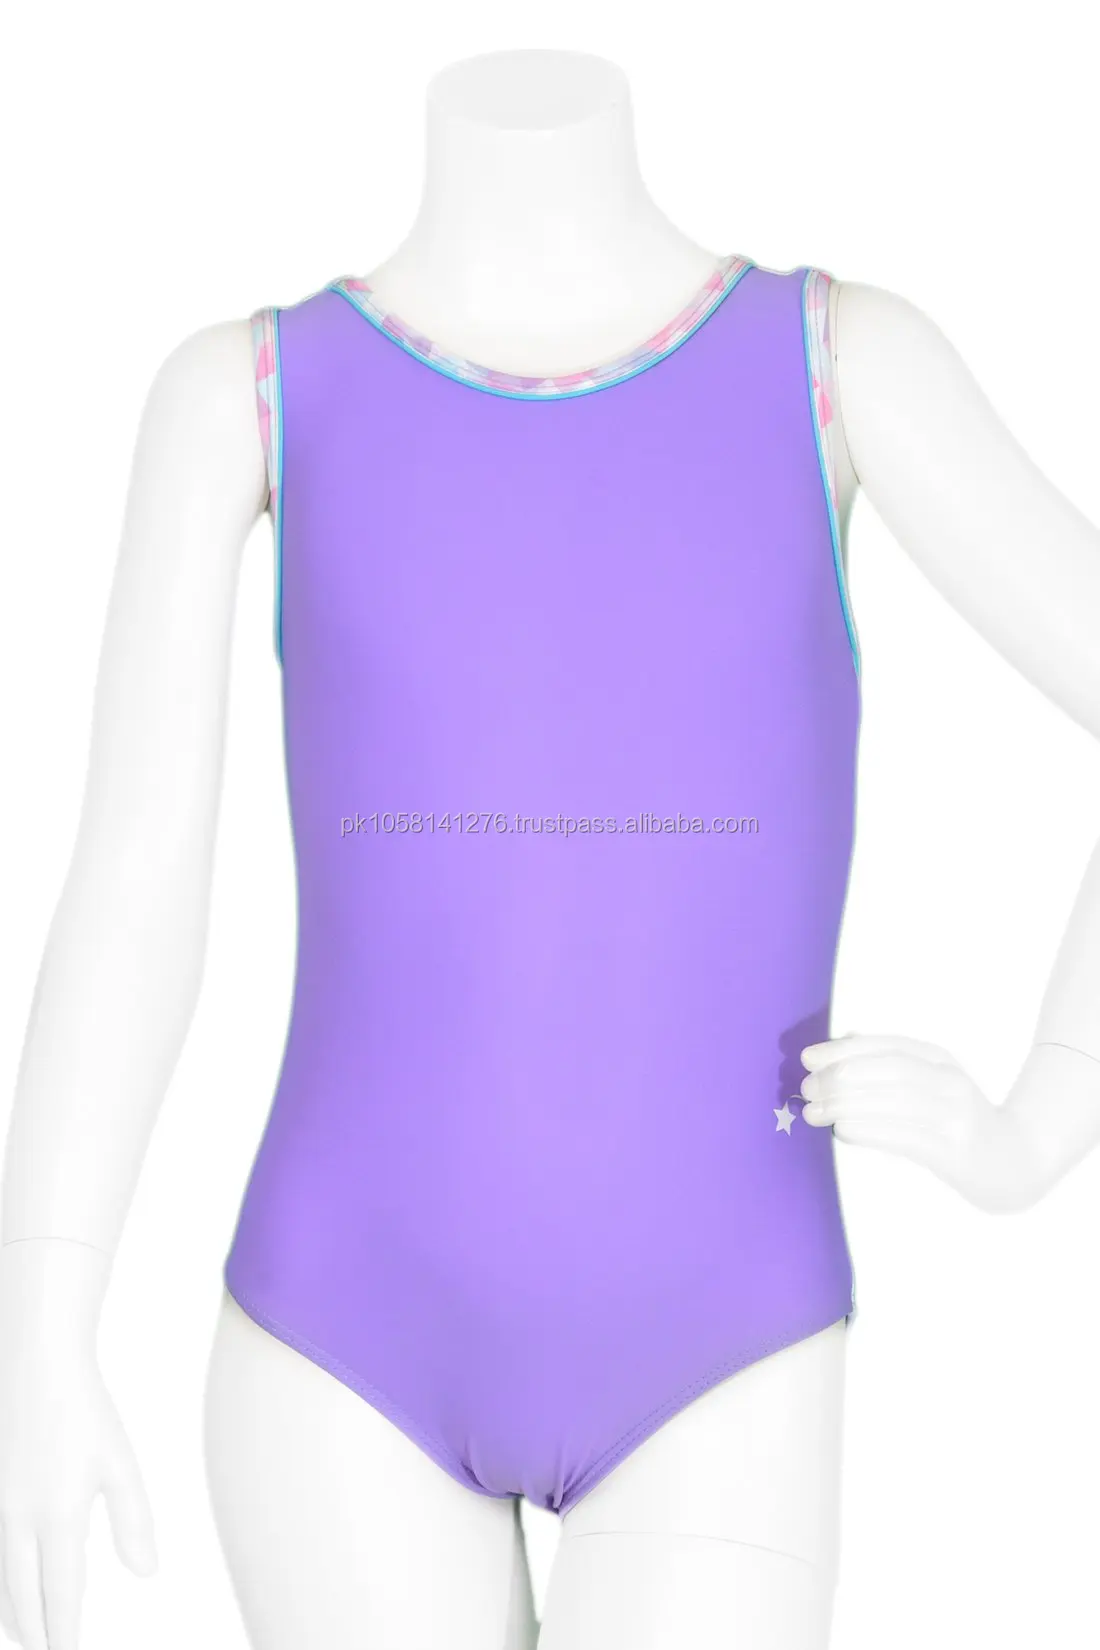 Stretchable Lycra Girls Gymnastic Leotards Costumes Buy Leotard 4818